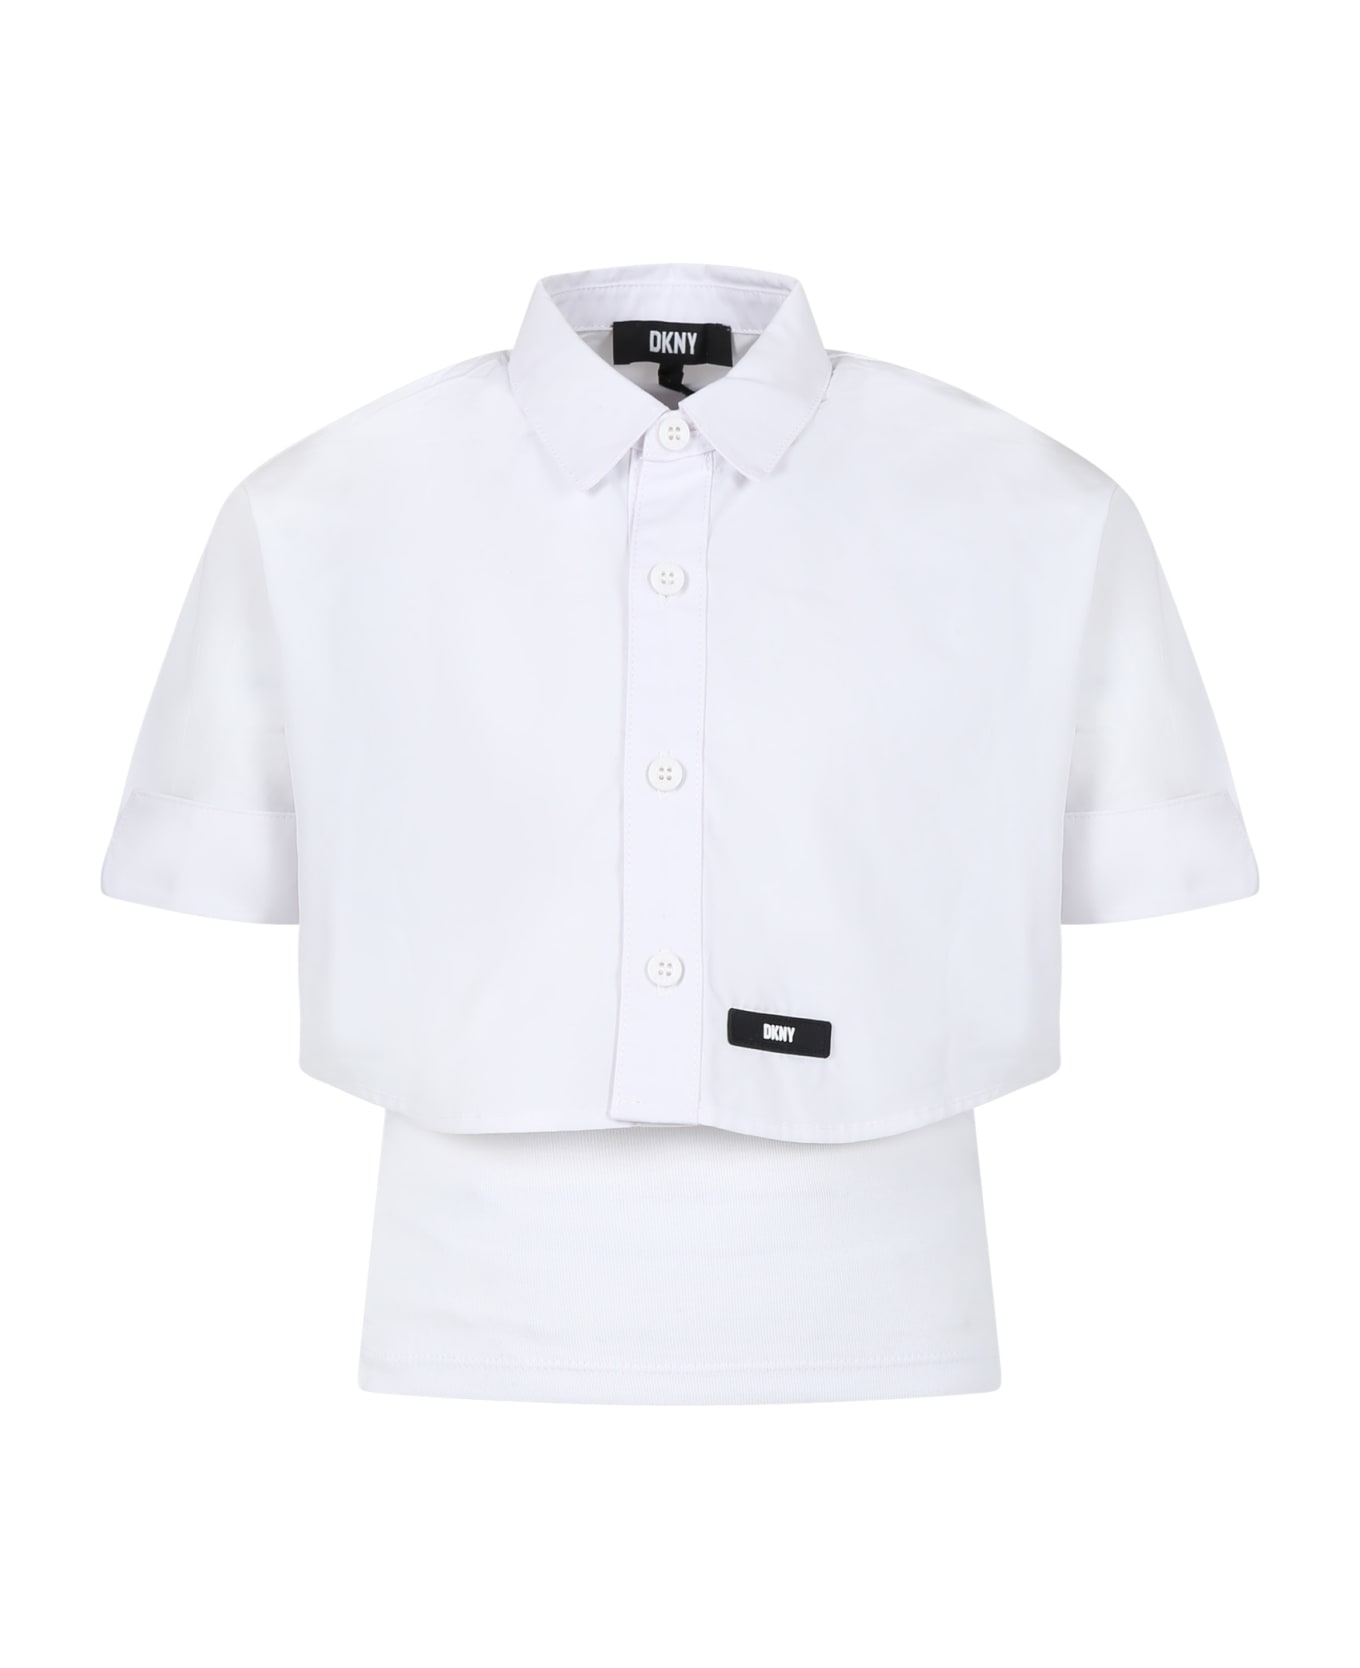 DKNY White Cotton Shirt For Girl - White シャツ